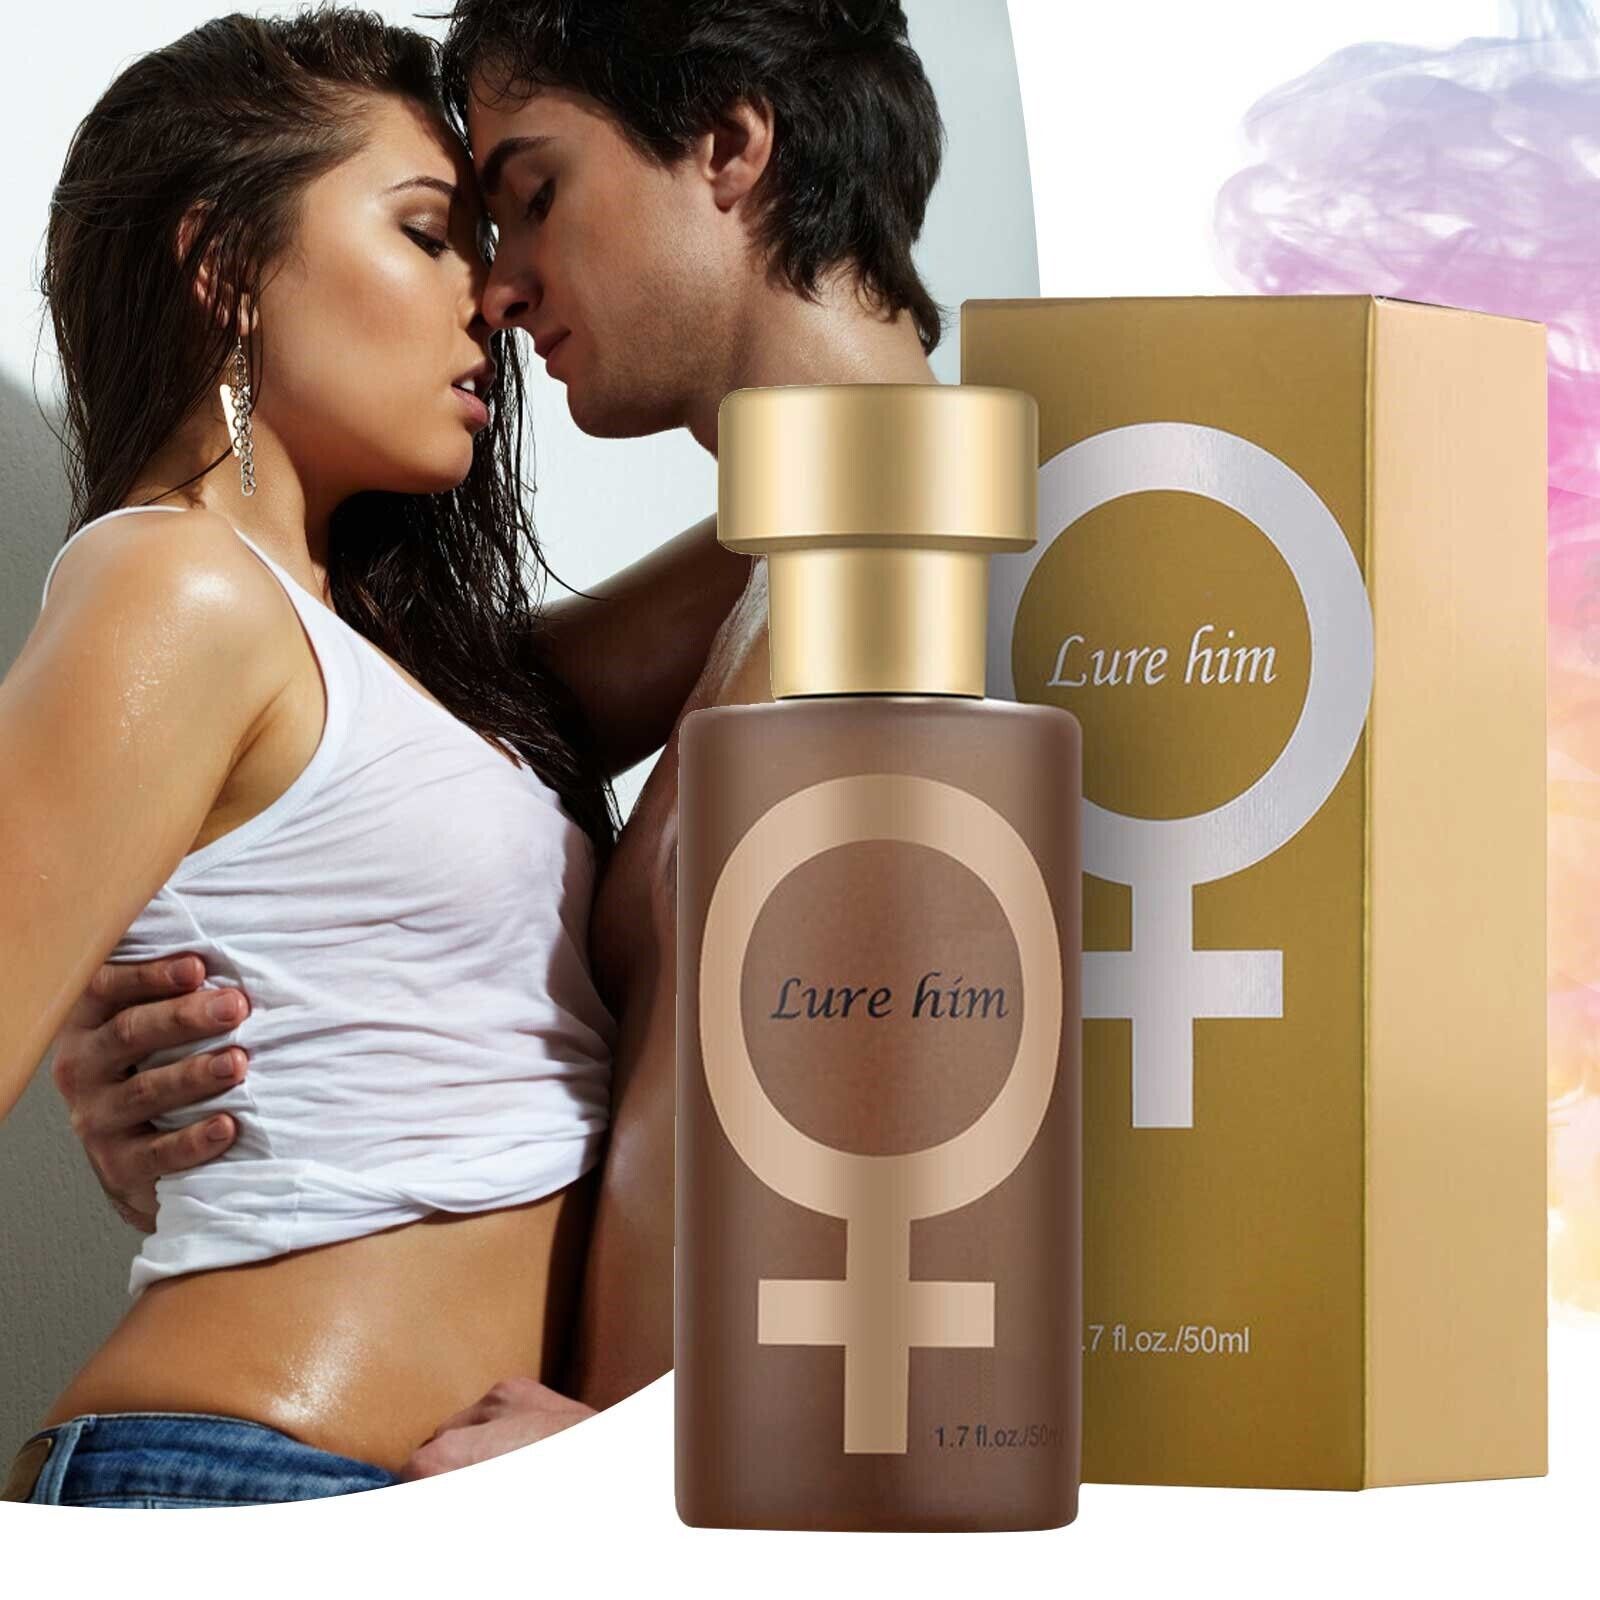 Aphrodisiac Golden Lure her/him Pheromone Perfume Spray Oil For Men Women 50ml